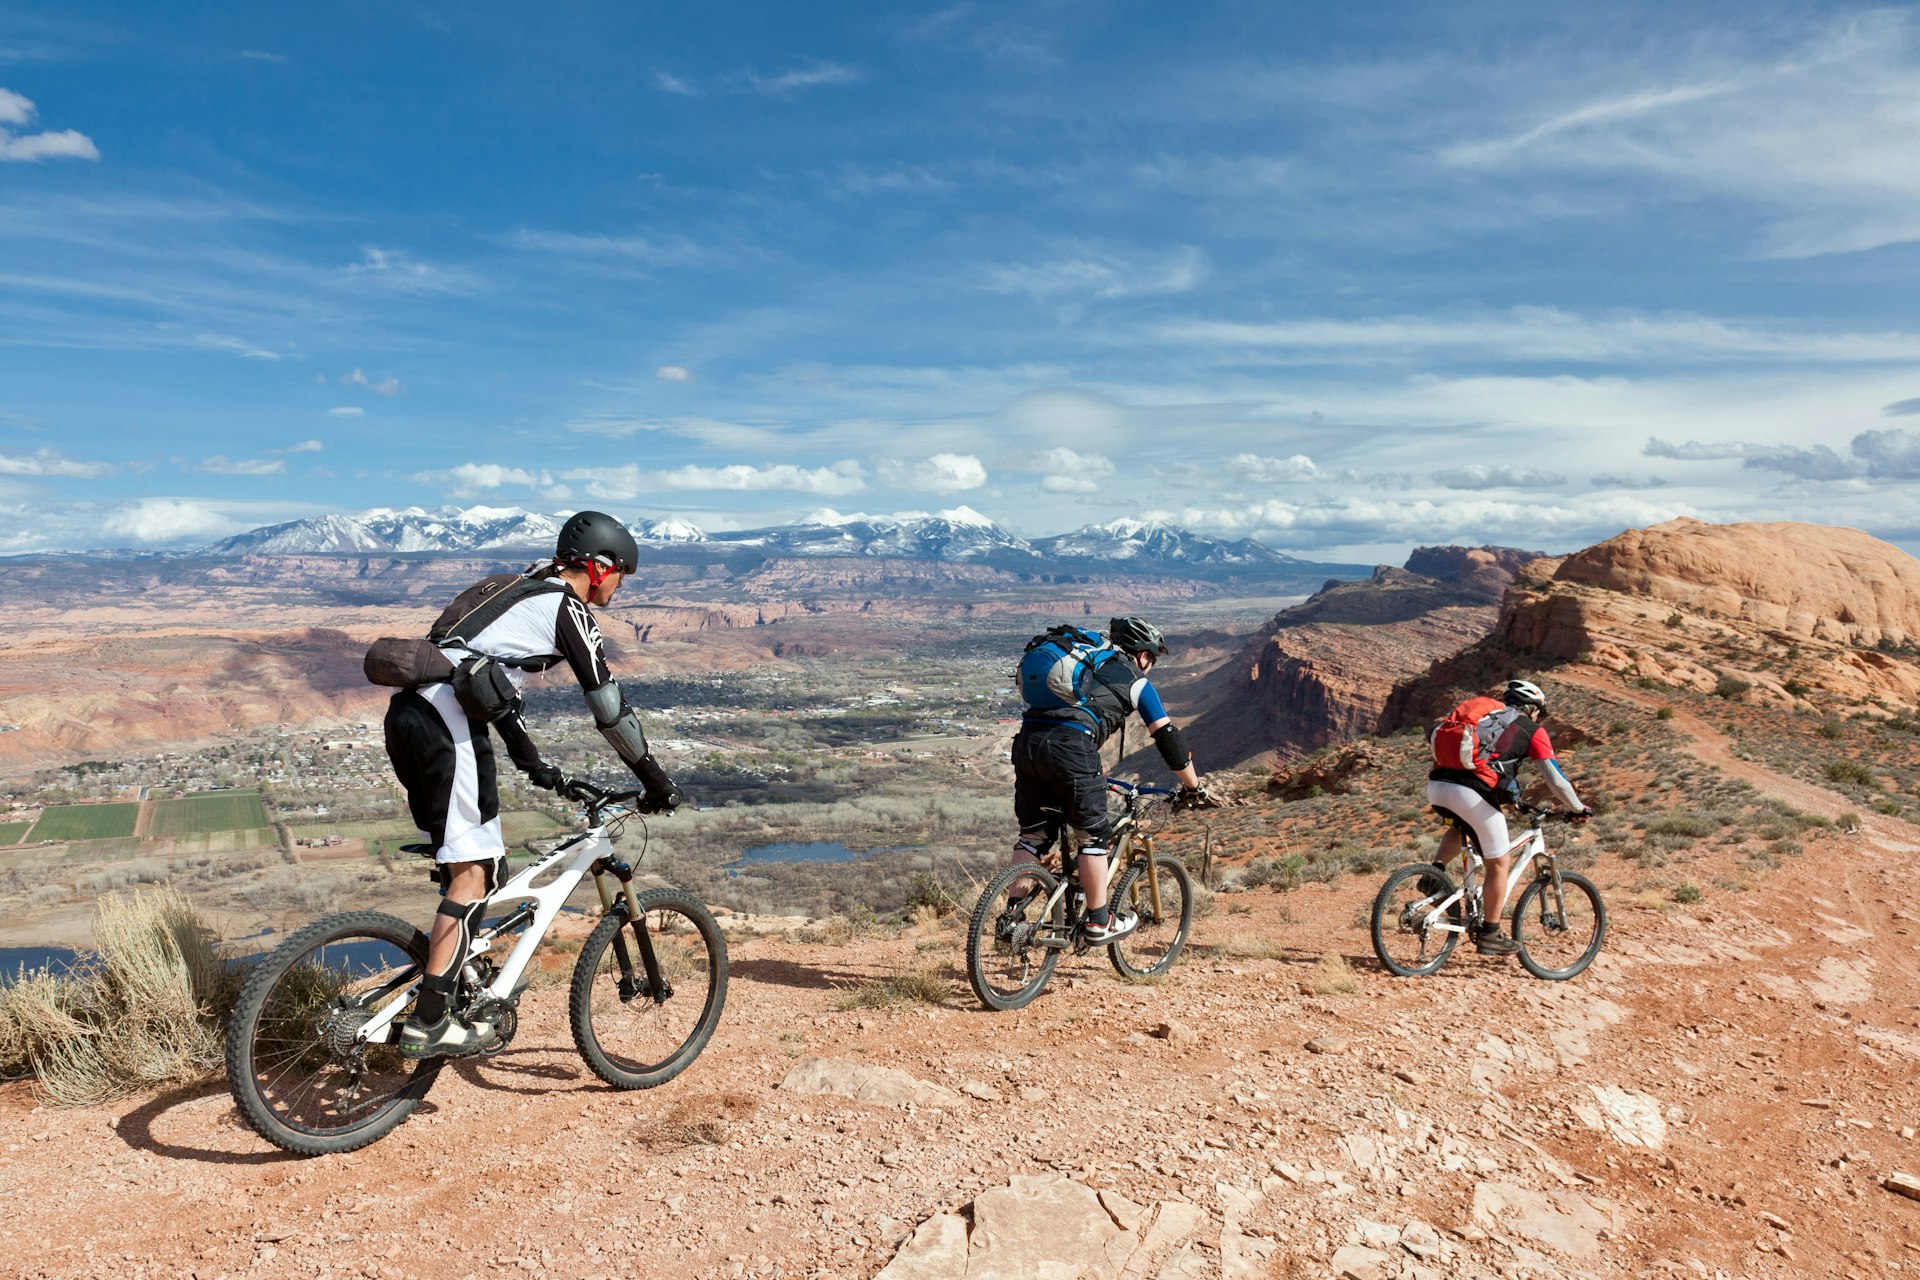 Mountain bikers on a desert trail near Moab